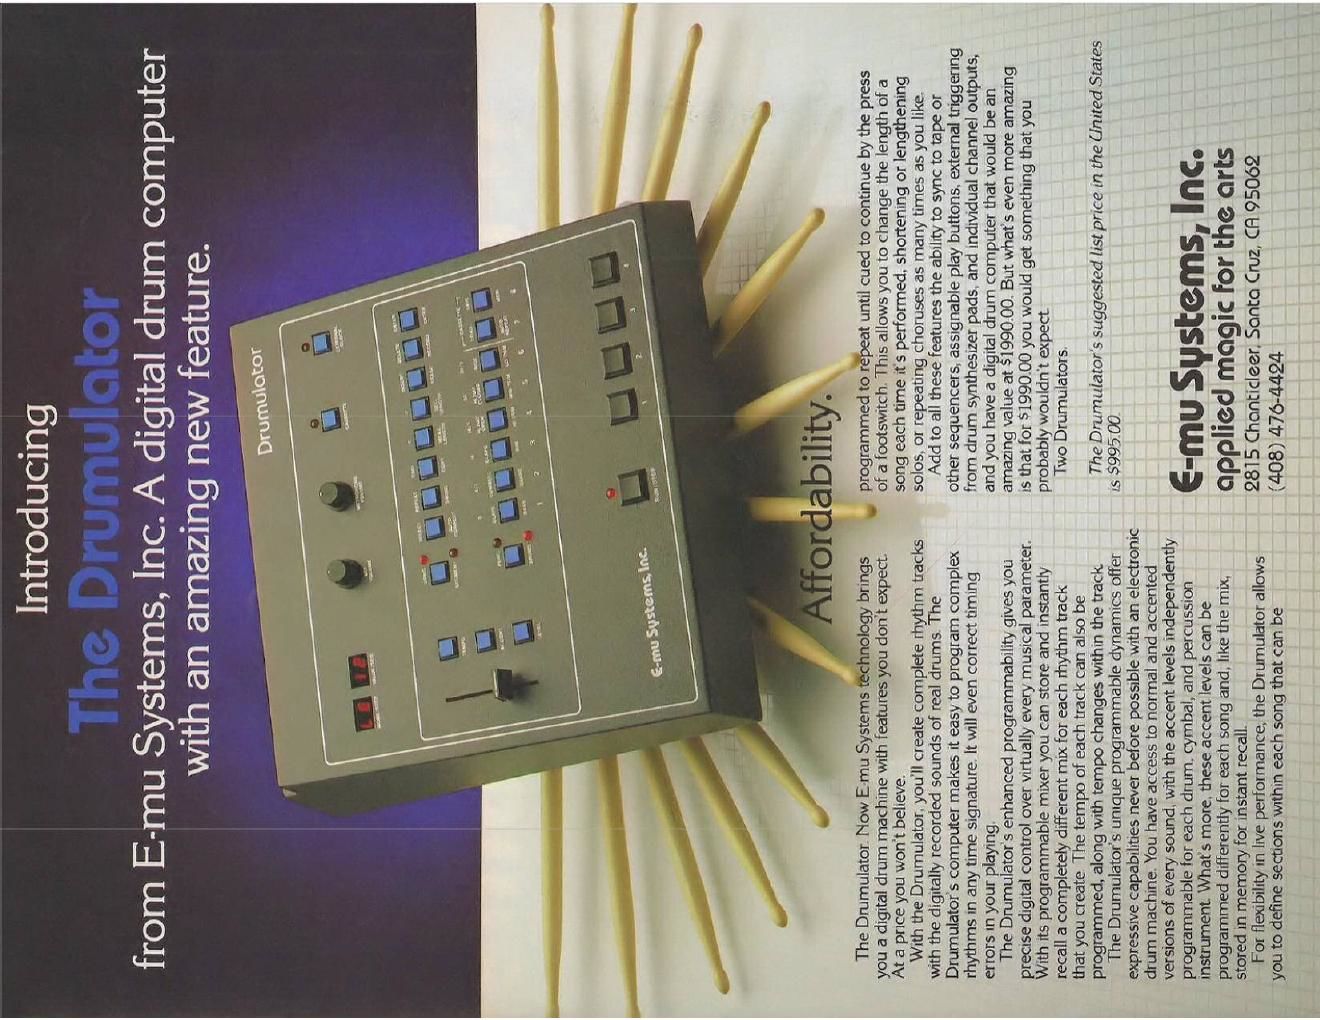 emu drumulator 1983 product advertisement